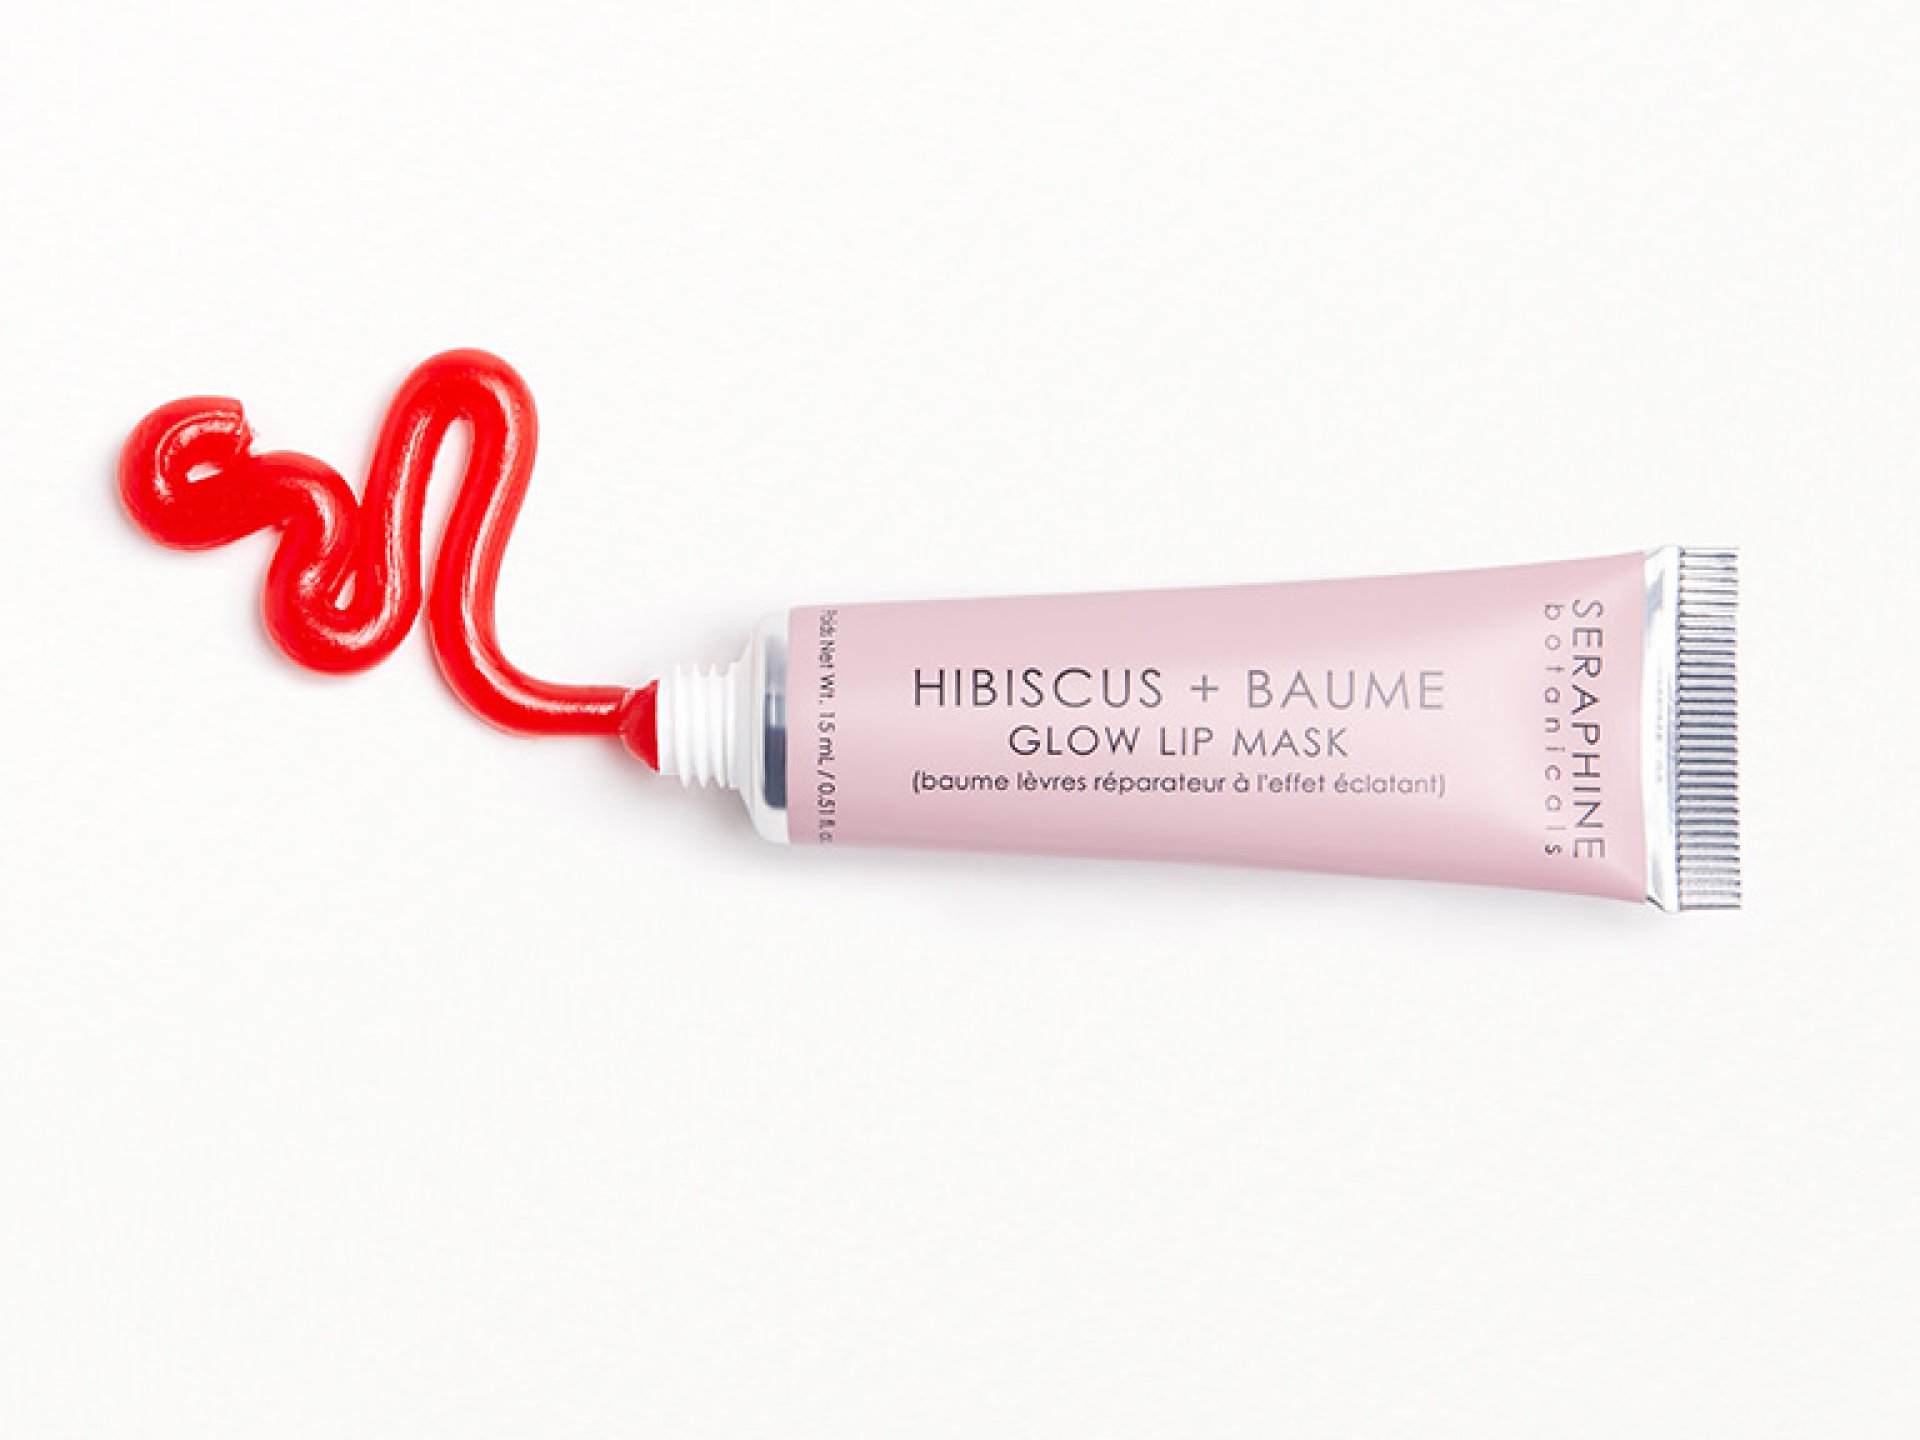 SERAPHINE BOTANICALS Hibiscus + Baume - Glow Lip Mask